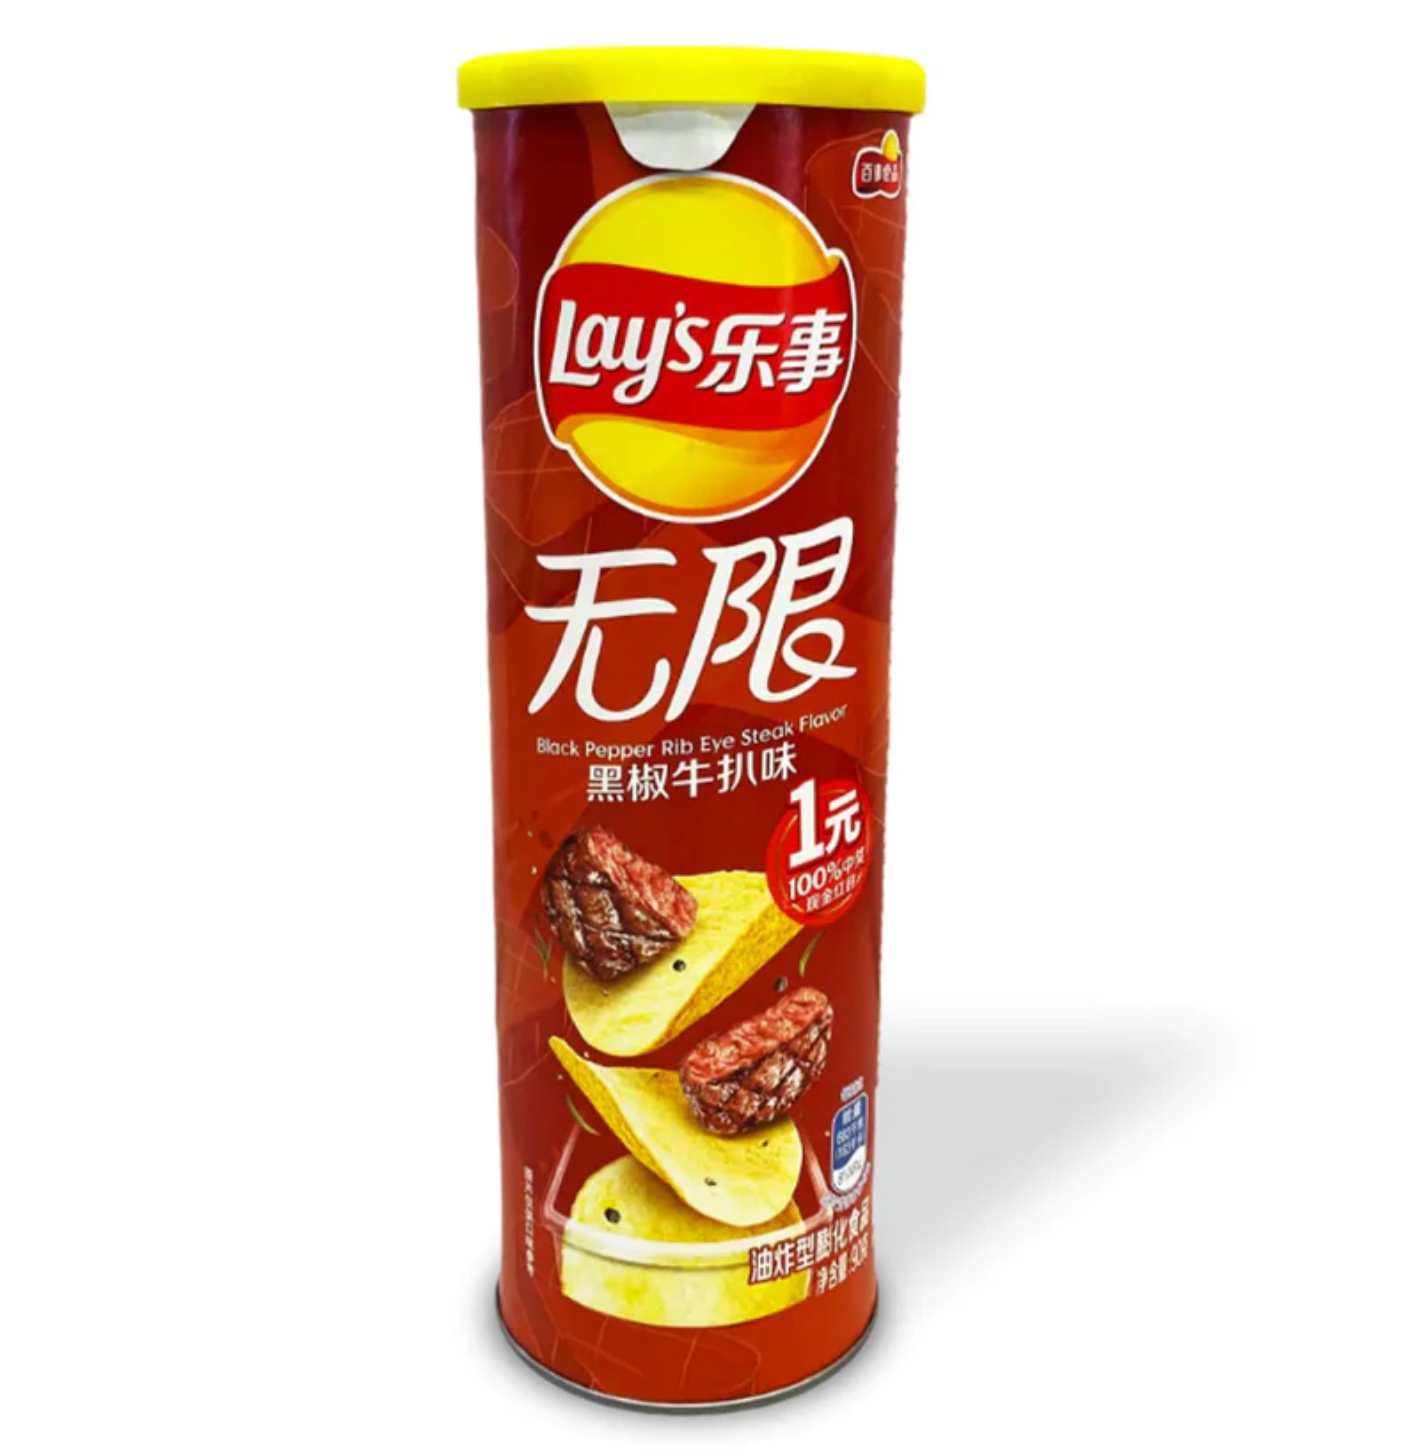 Lay's Stax China: Black Pepper Rib Eye Steak Potato Chips (90g)